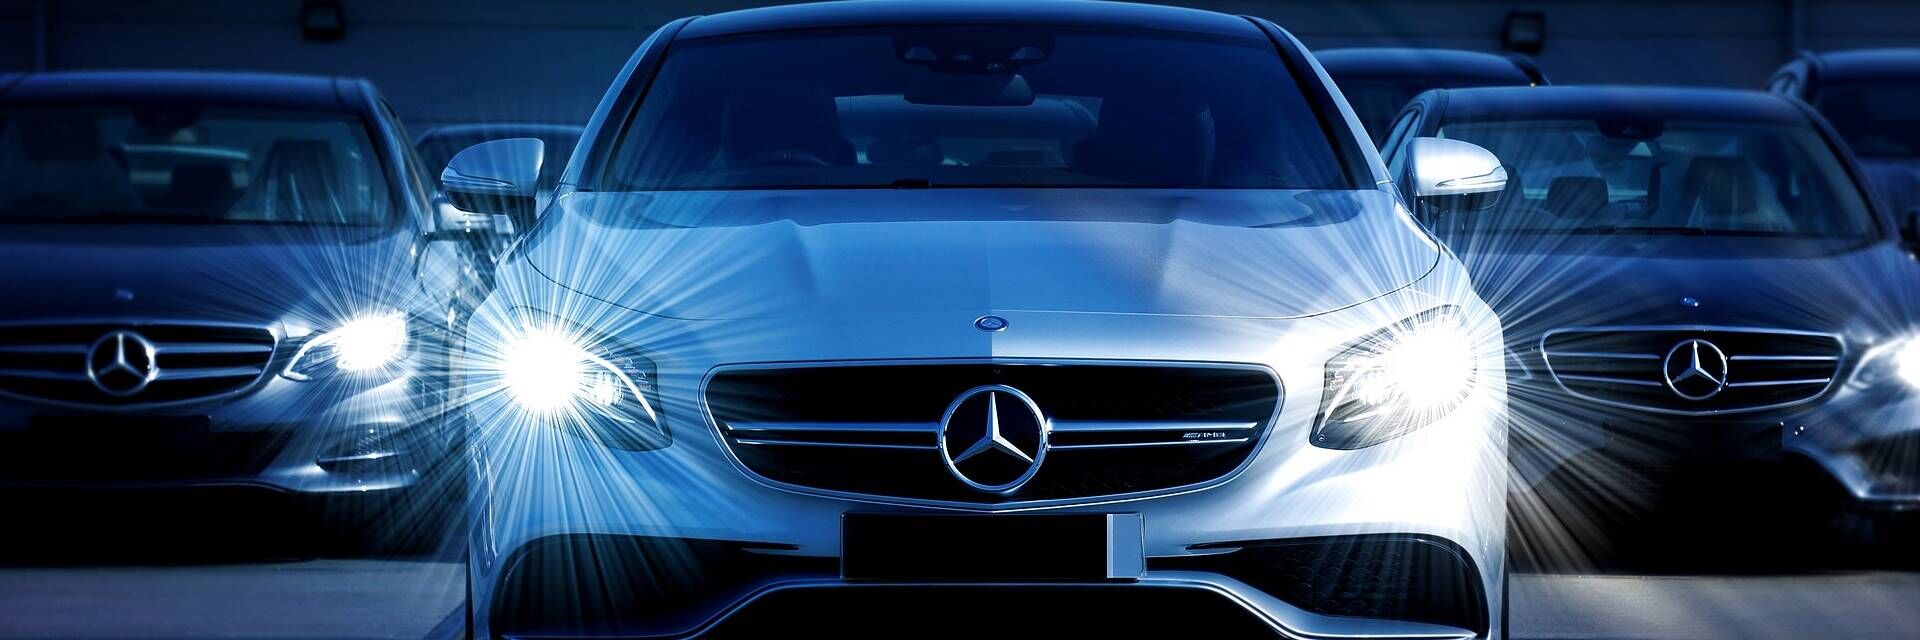 ¿Qué significa AMG en Mercedes?